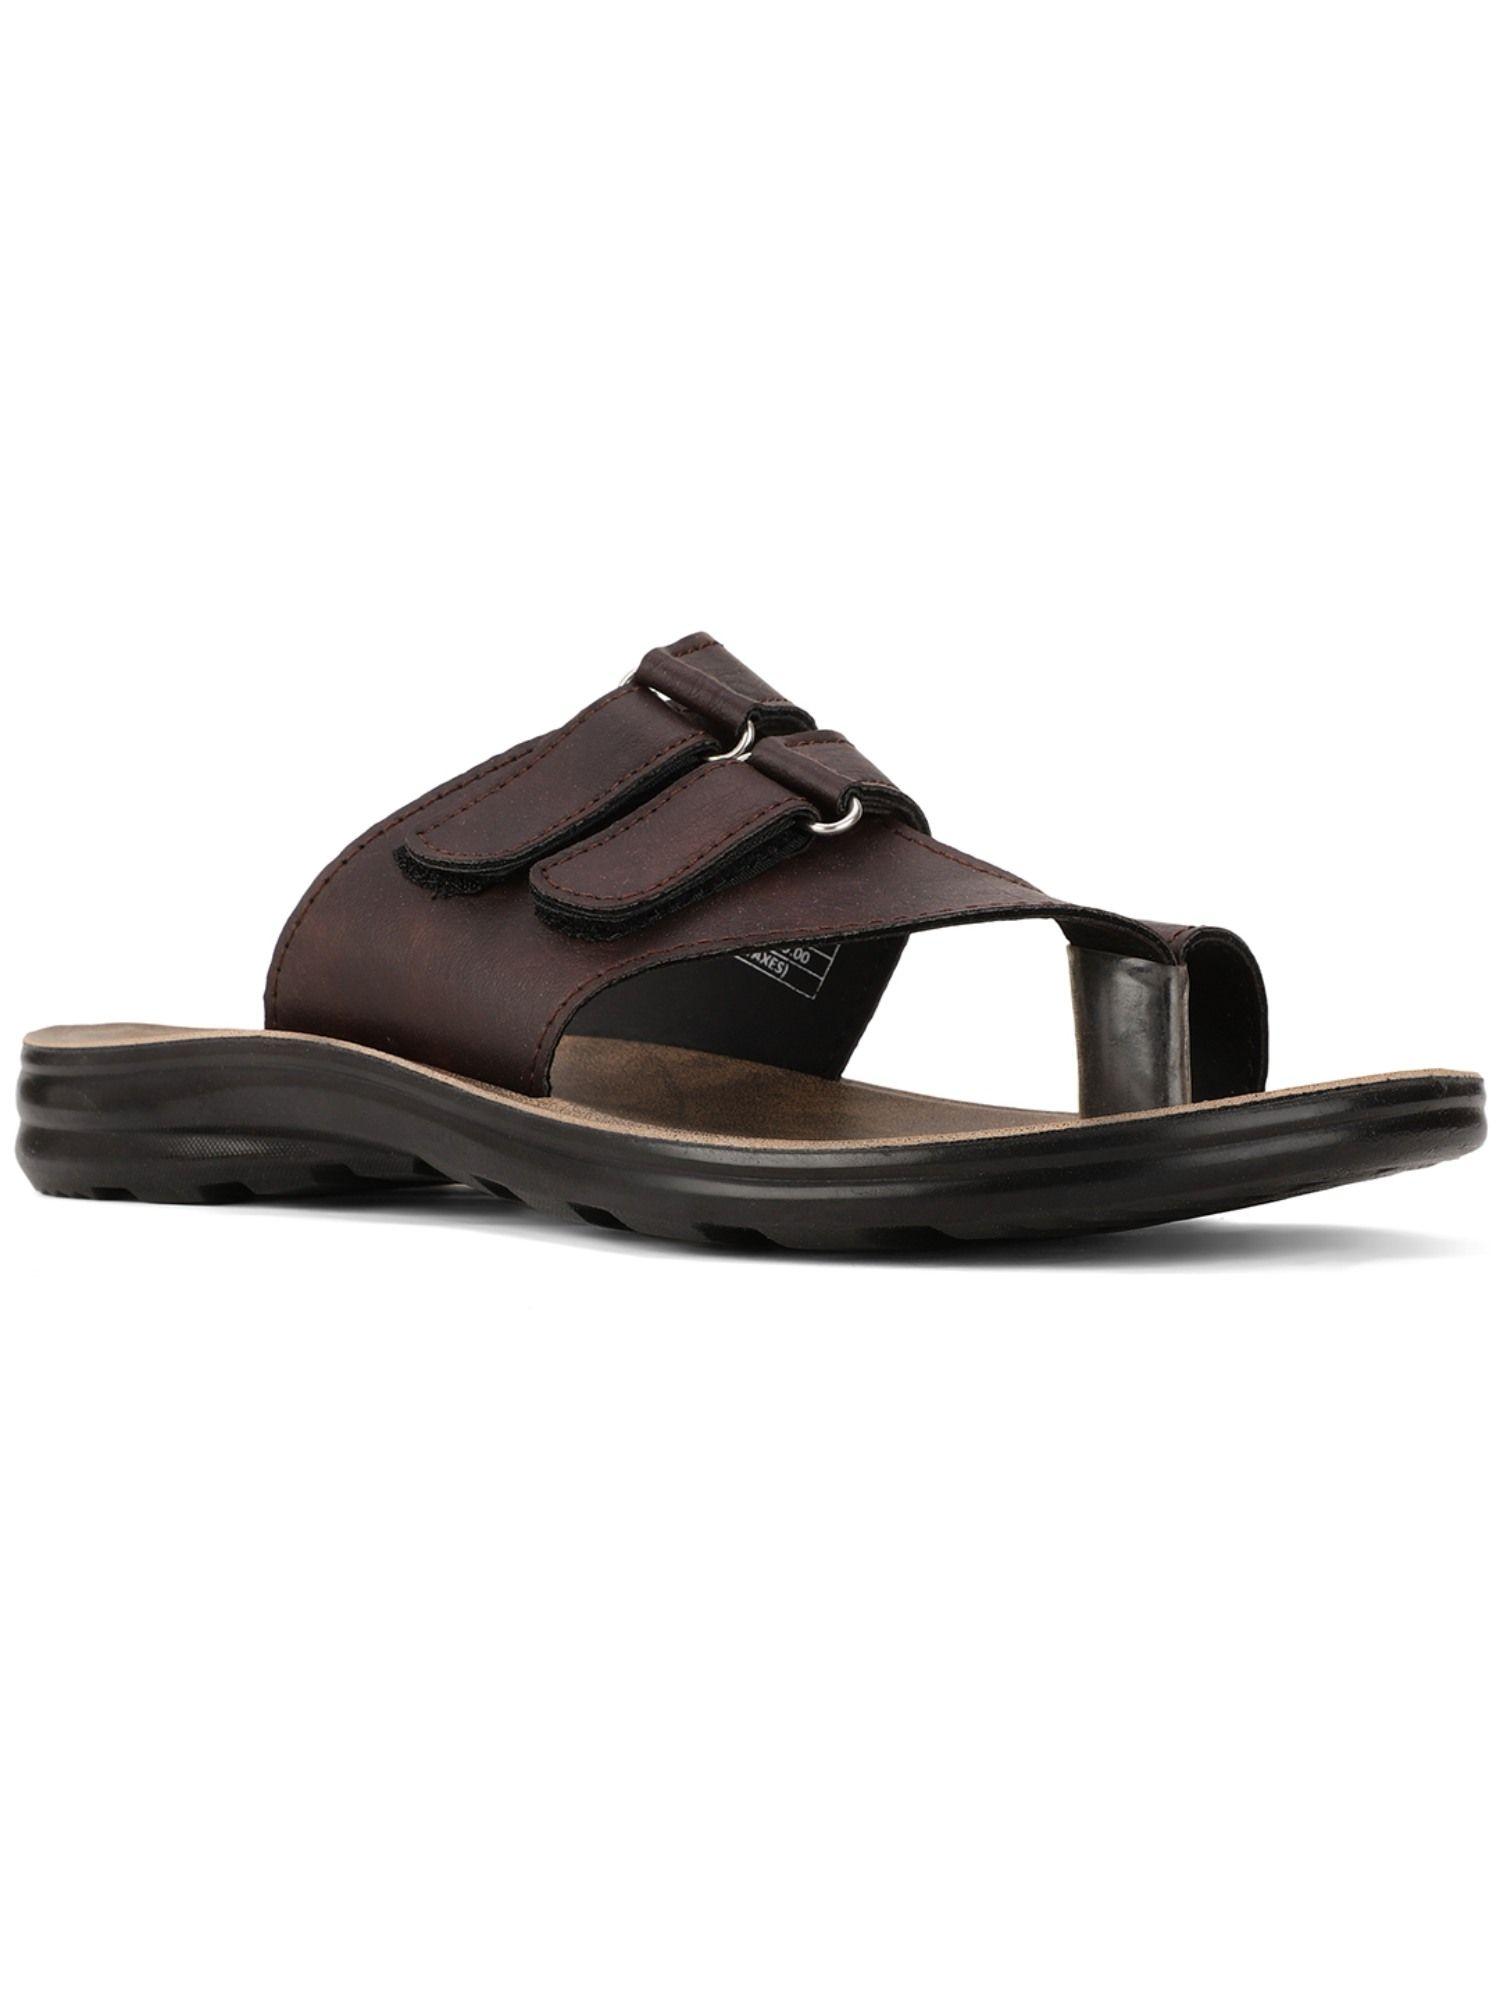 men-brown-slip-on-sandals